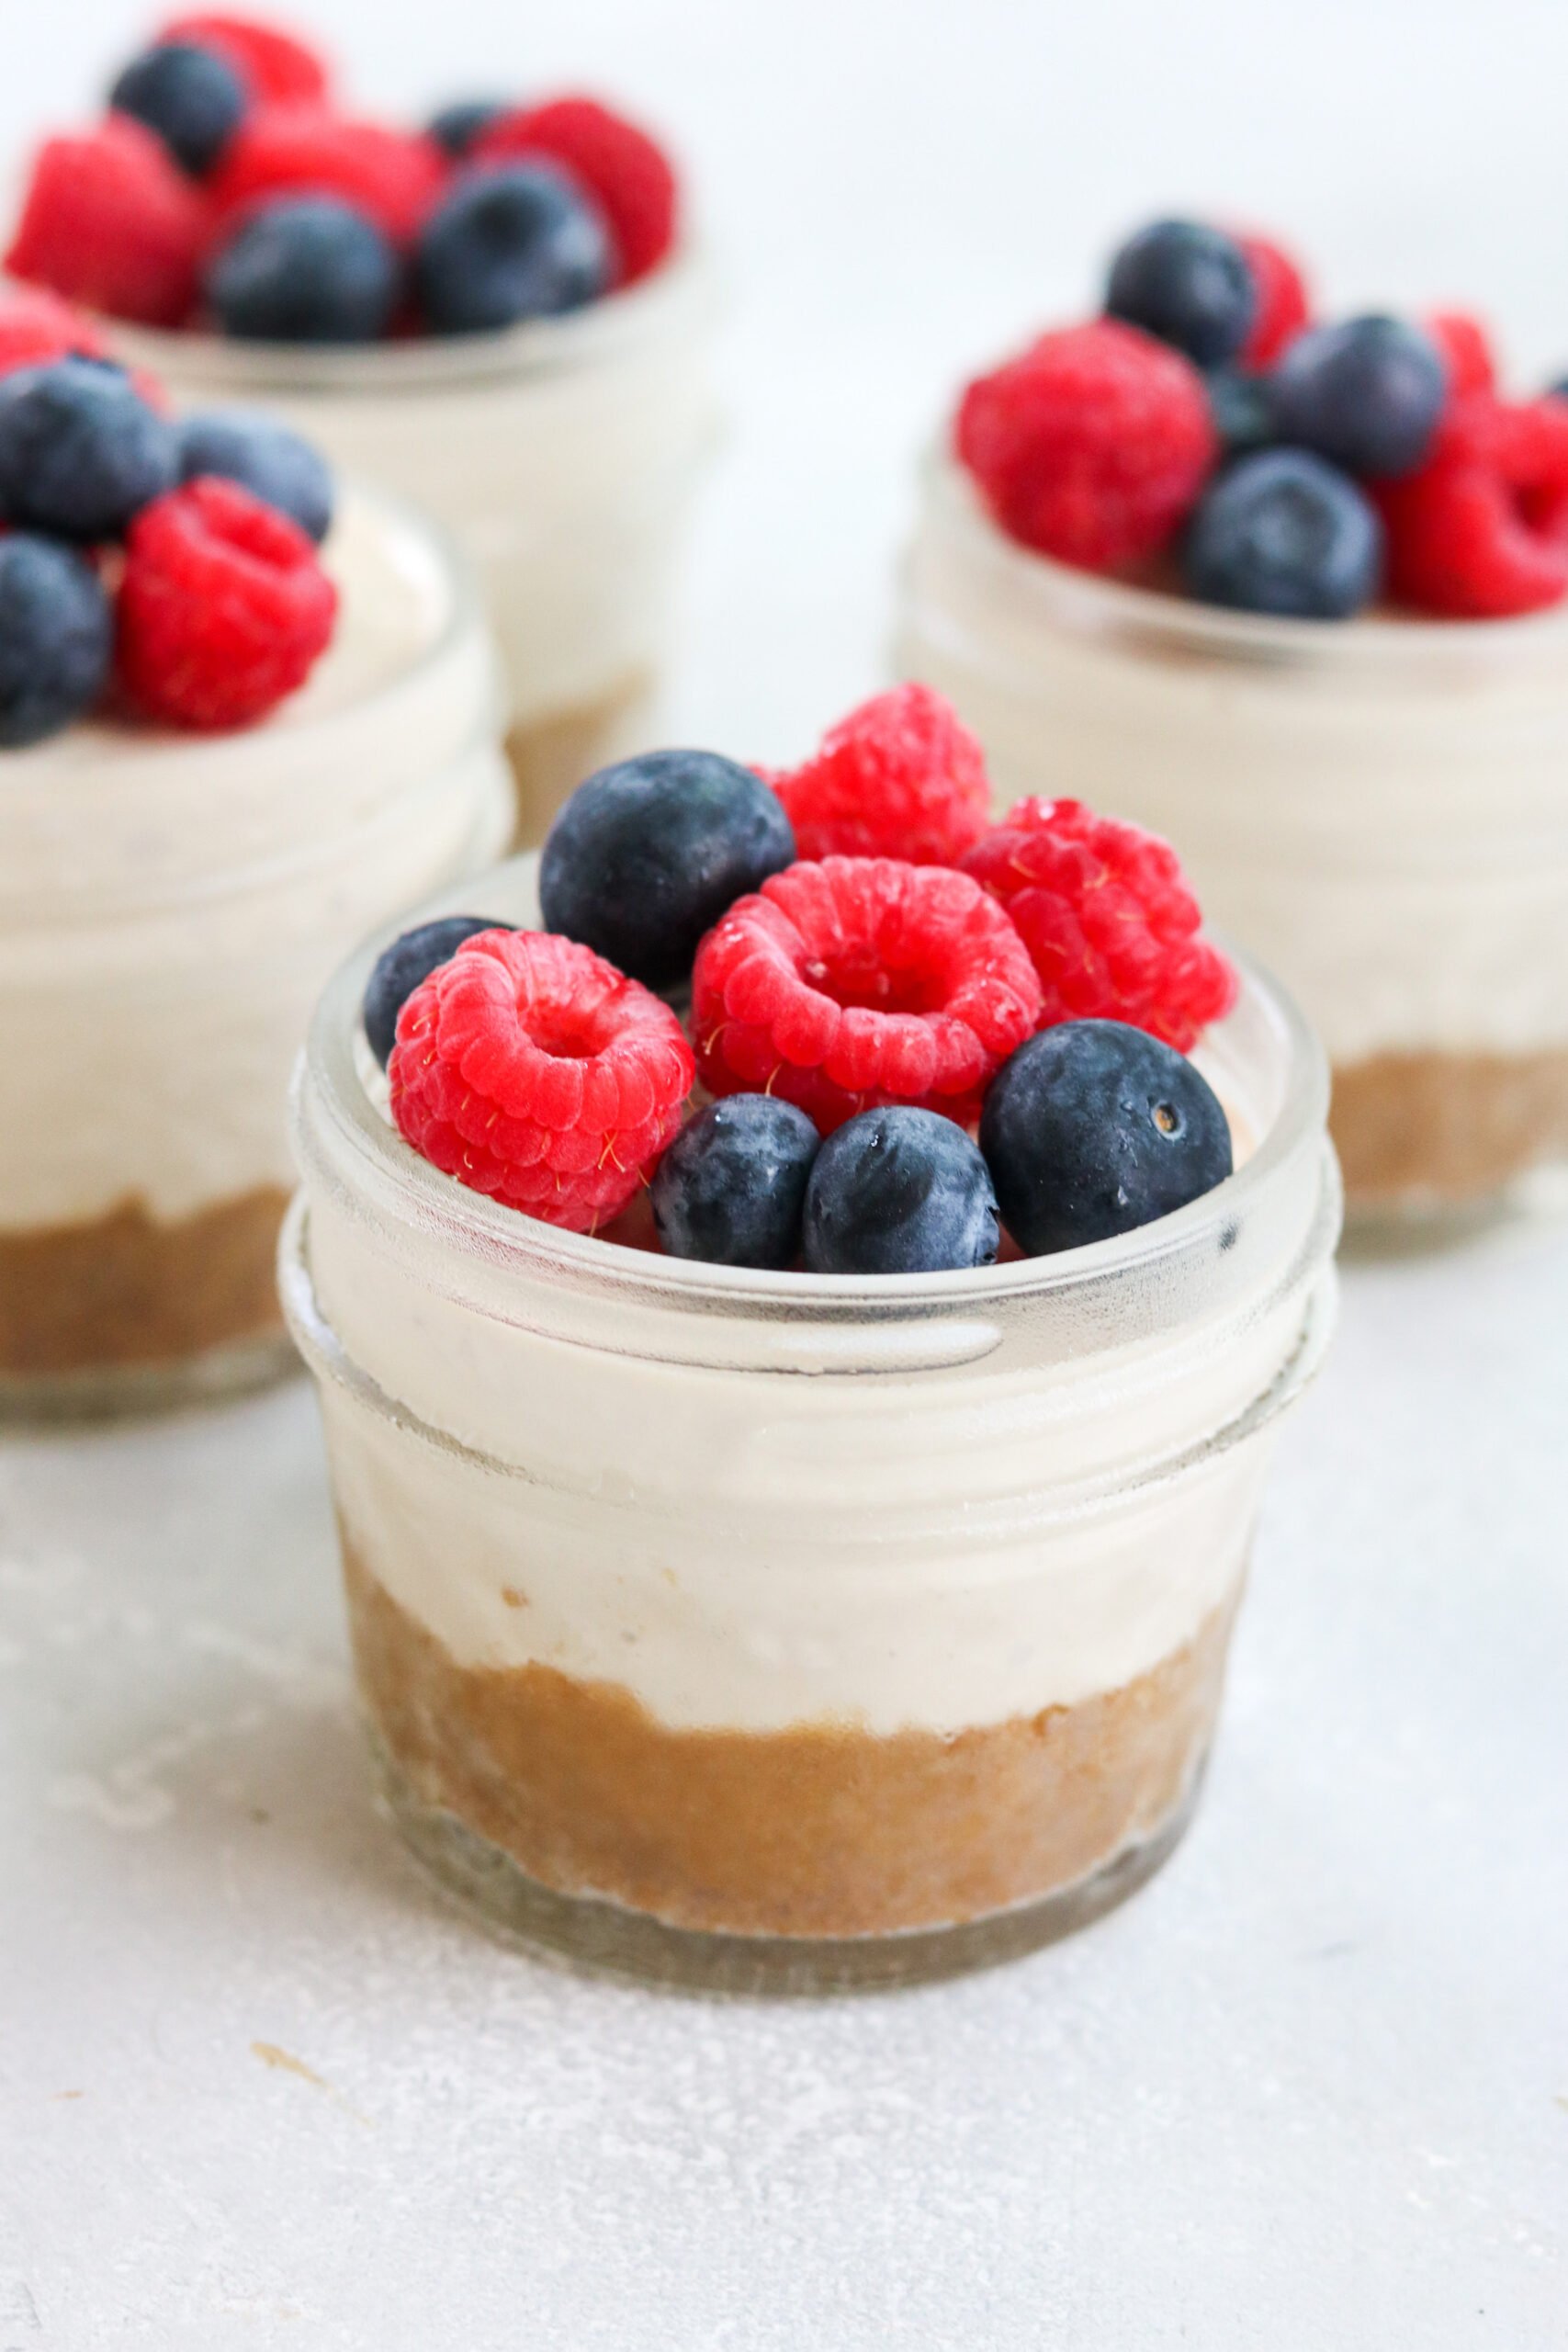 dairy free Mini Cheesecake Jars with berries on top